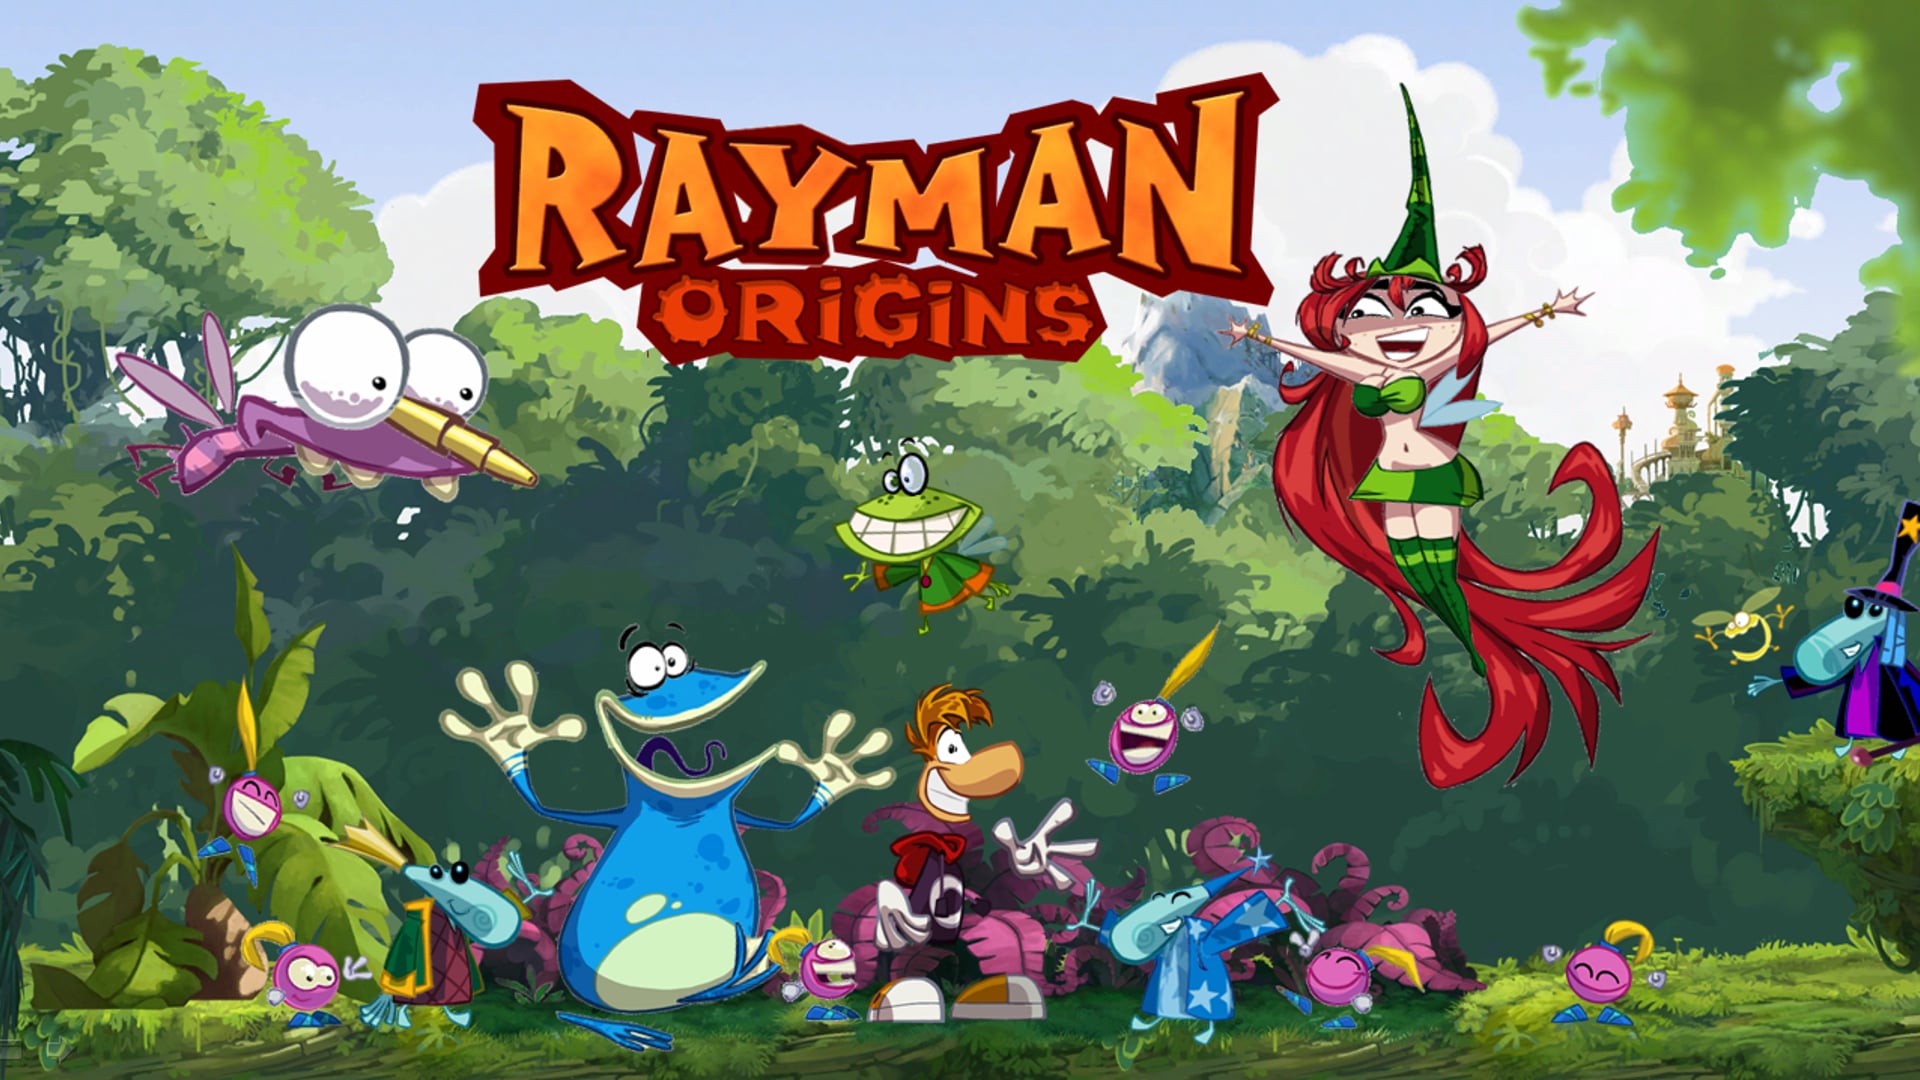 Rayman Origin Gameplay sound design by Christian Zerilli